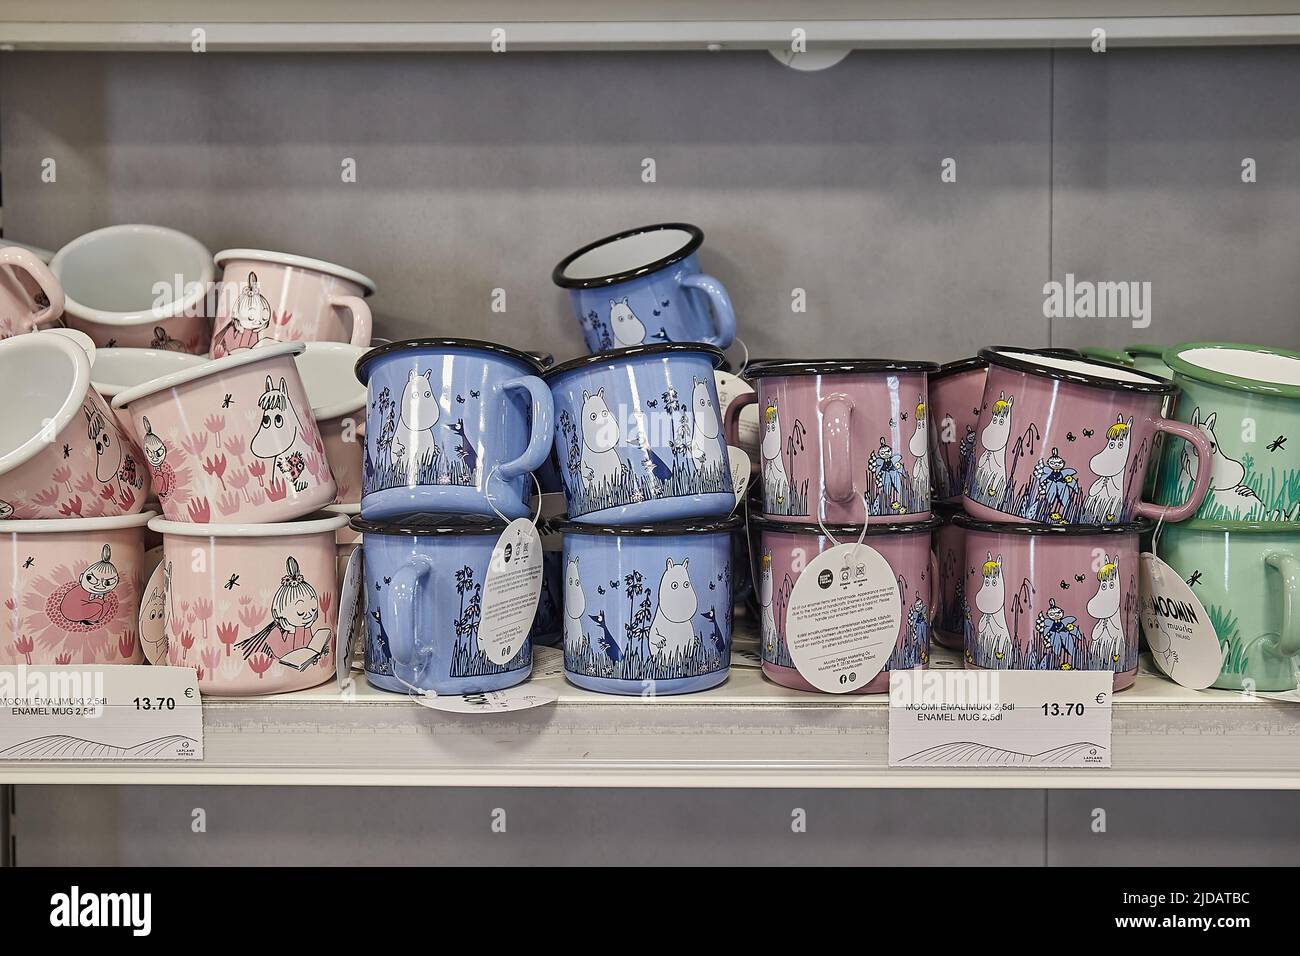 Moomins themed mug in a shop Stock Photo